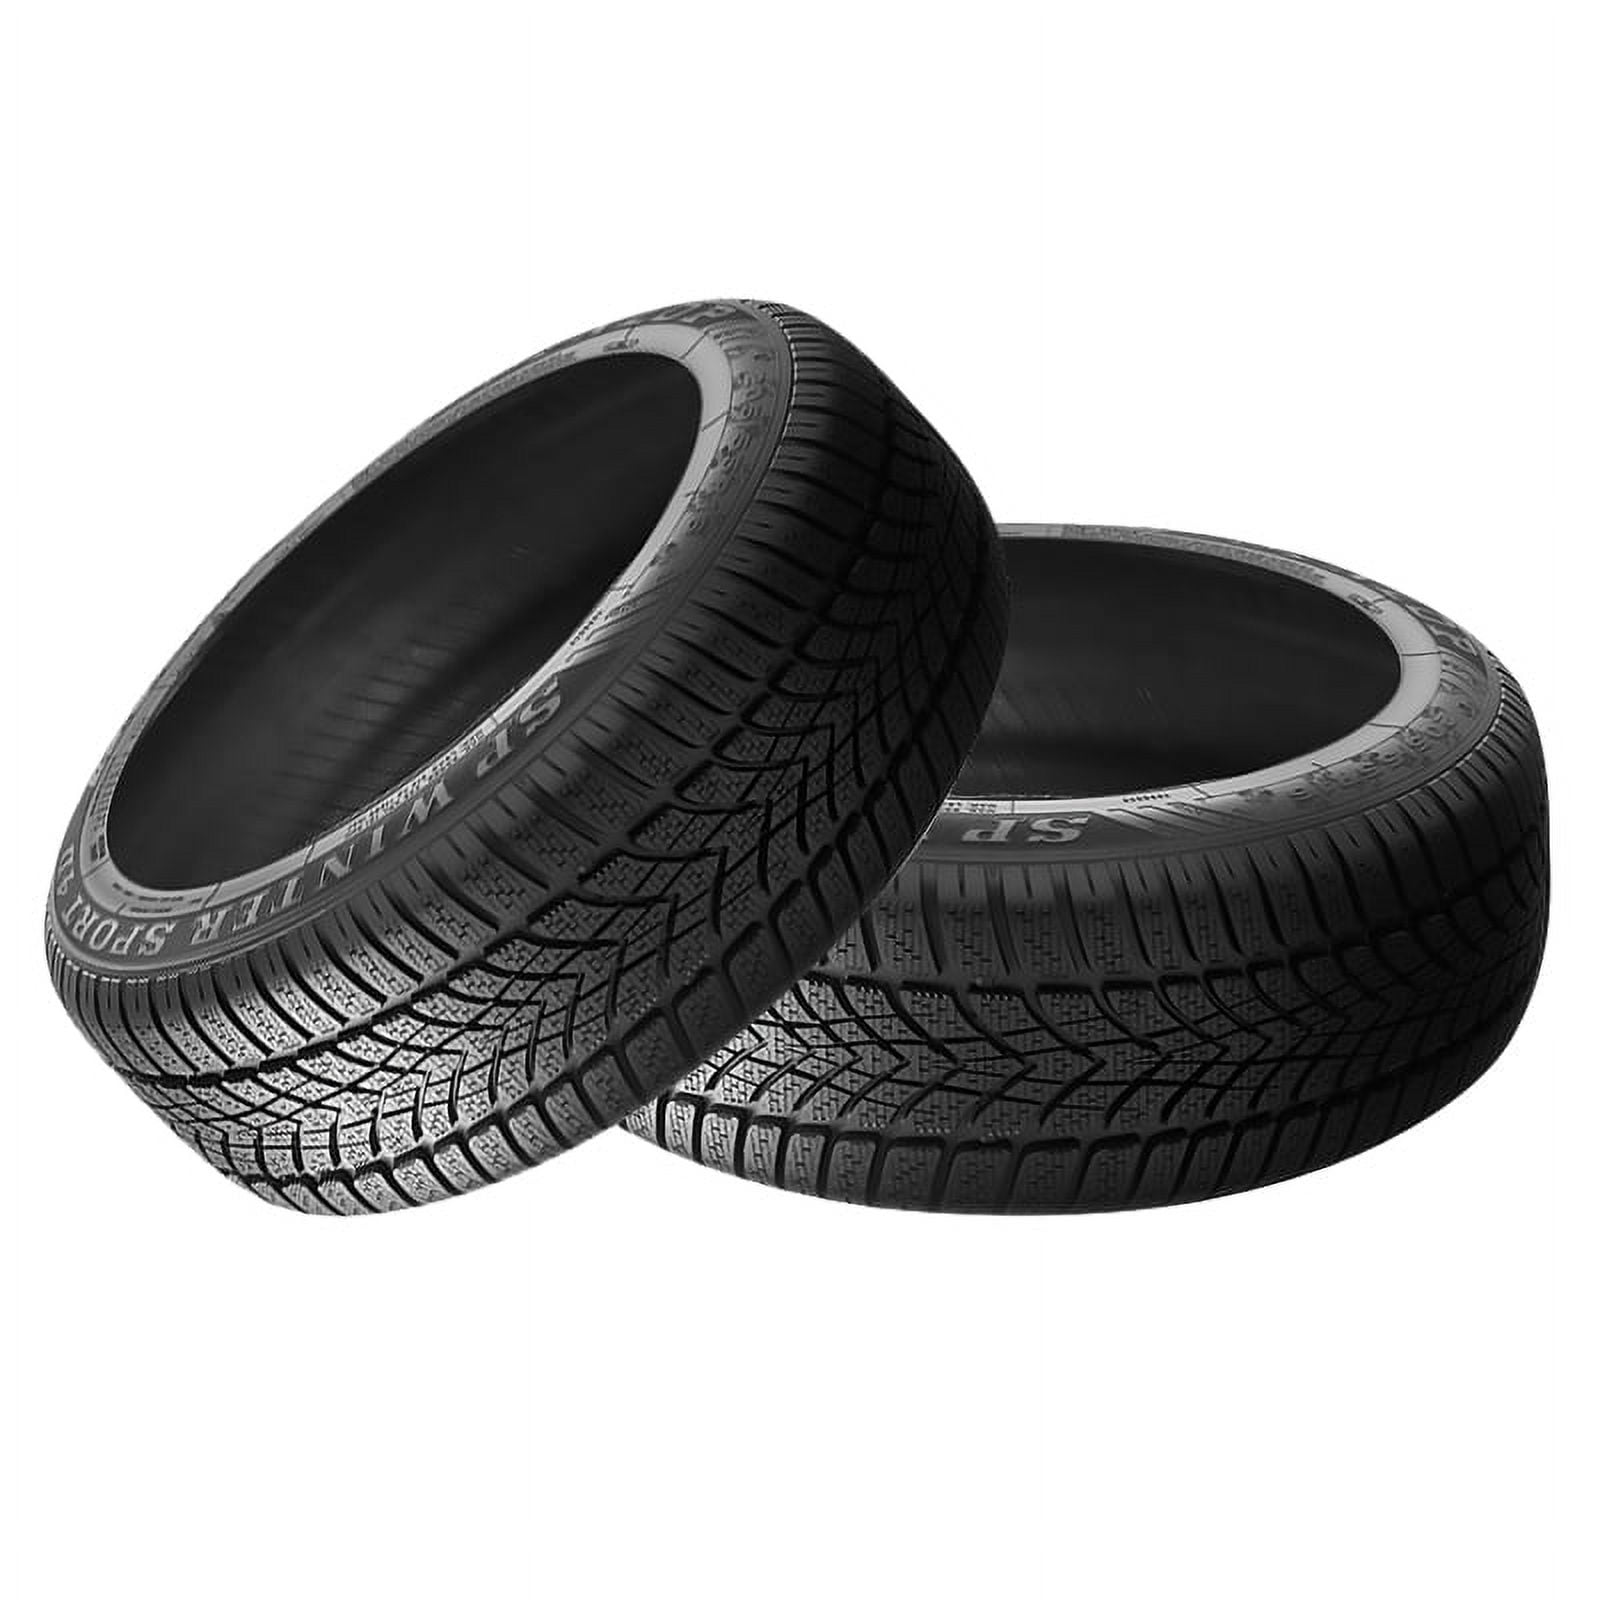 Dunlop sp winter sport 4d P275/30R21 98W bsw winter tire Fits: 2020-21  Polestar Polestar 1 Base